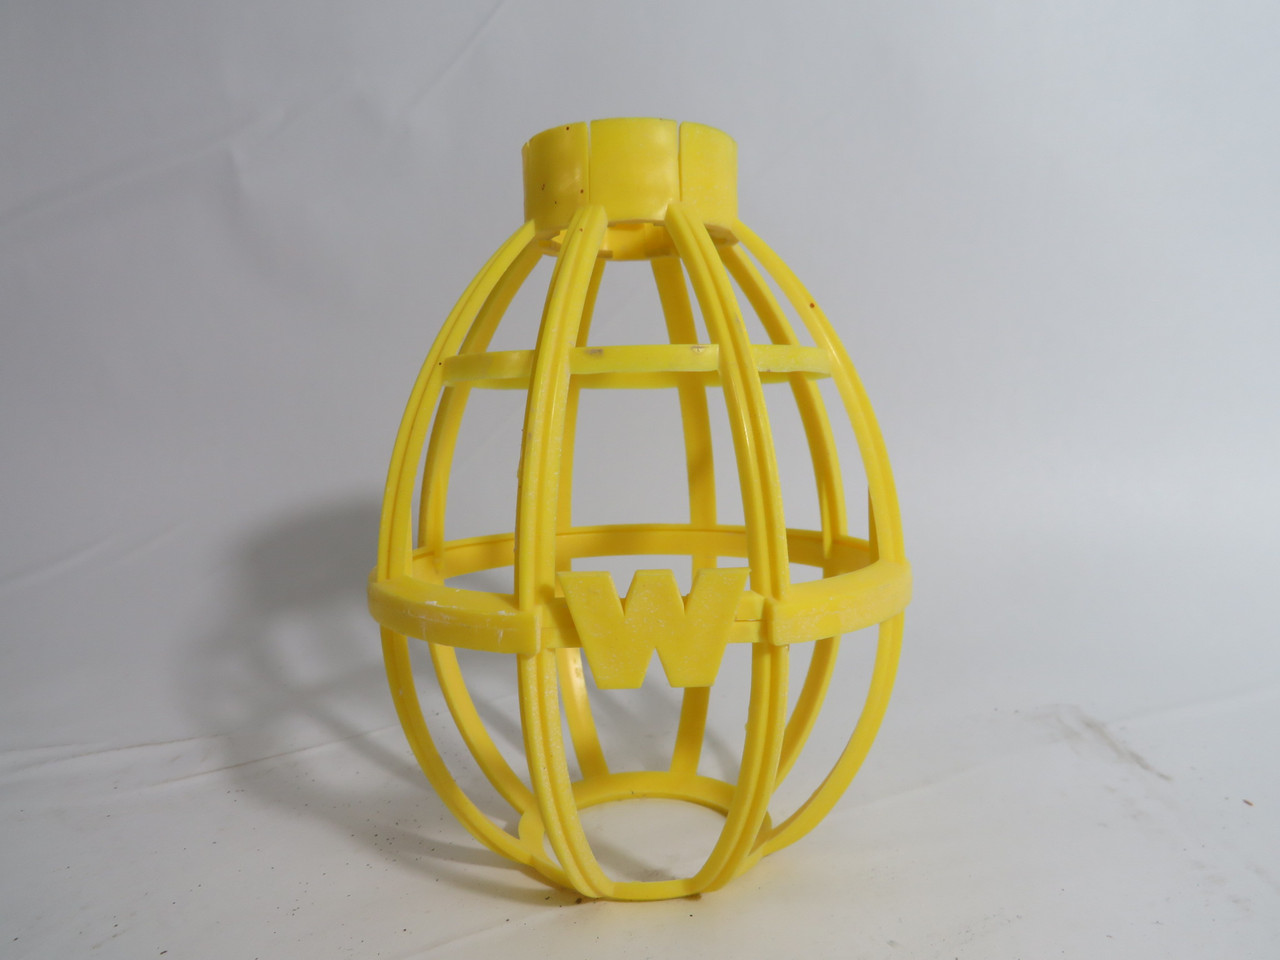 Molex Woodhead 1301120246 Yellow Plastic Bulb Cage USED